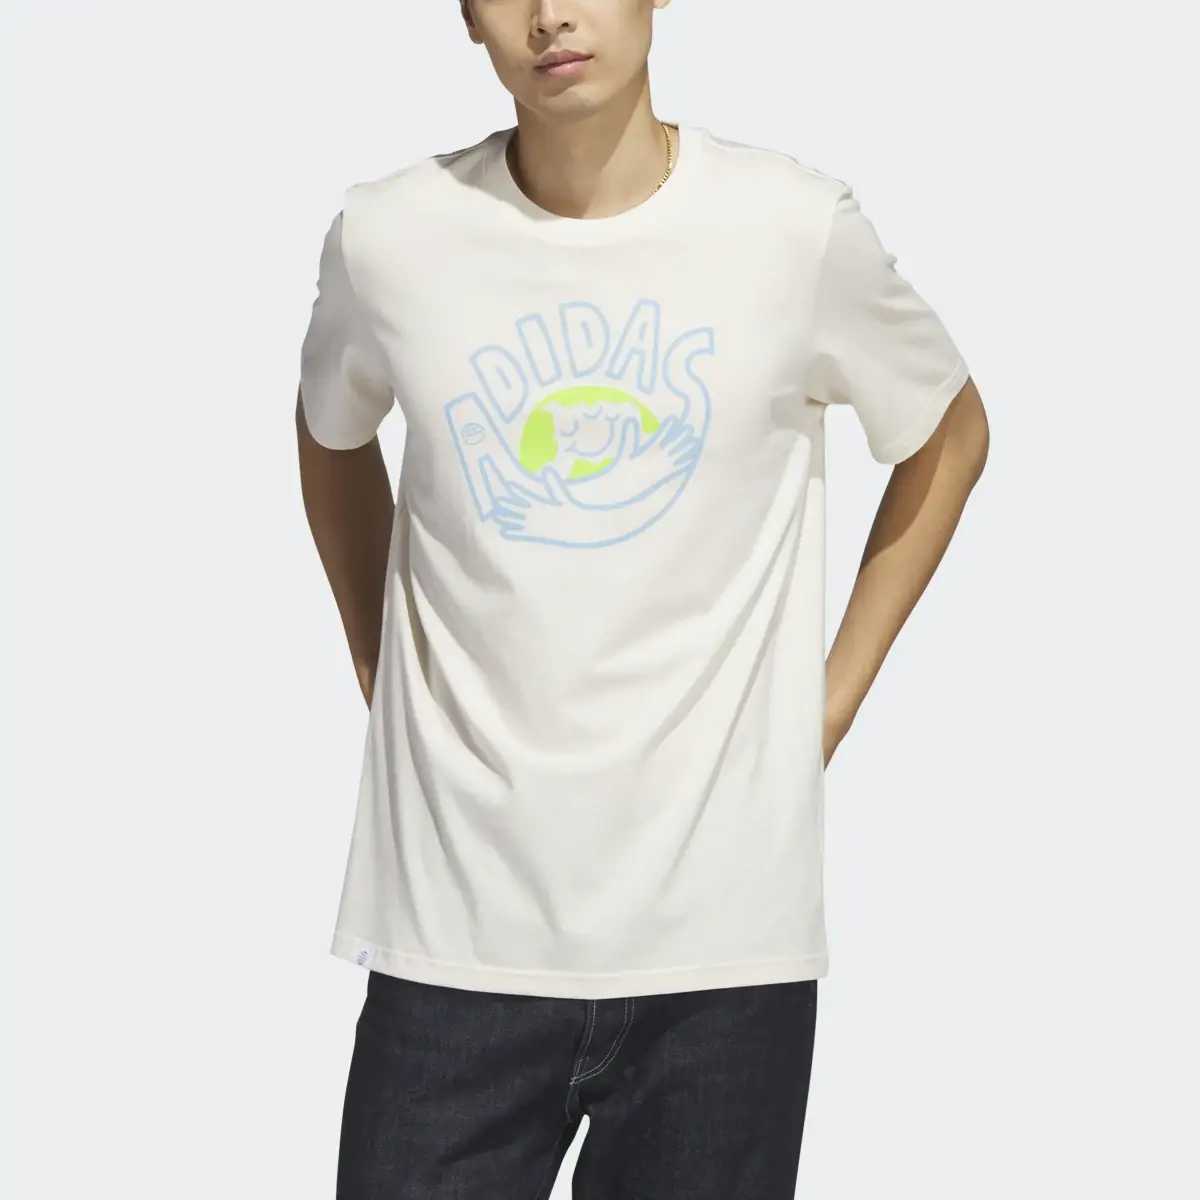 Adidas Change Through Sports Earth Graphic T-Shirt. 1